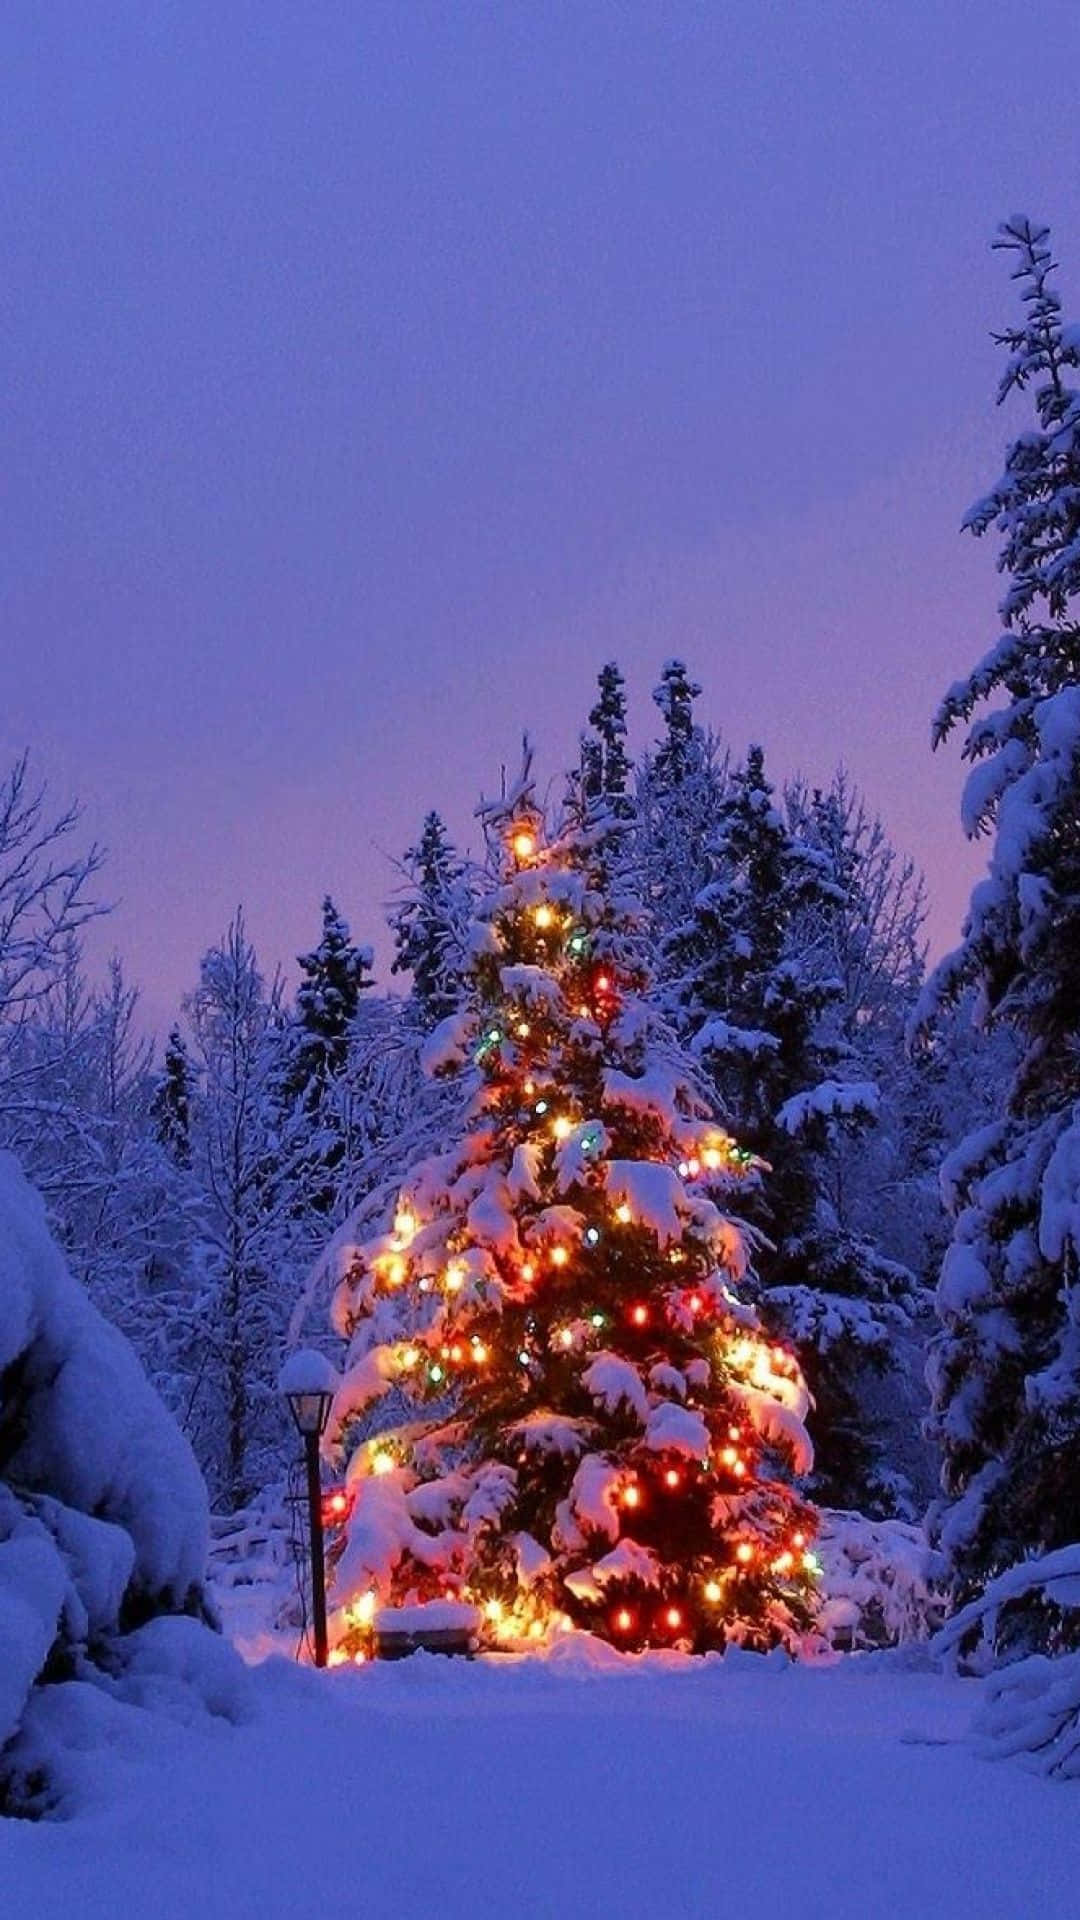 Enchanting Snowy Christmas Landscape